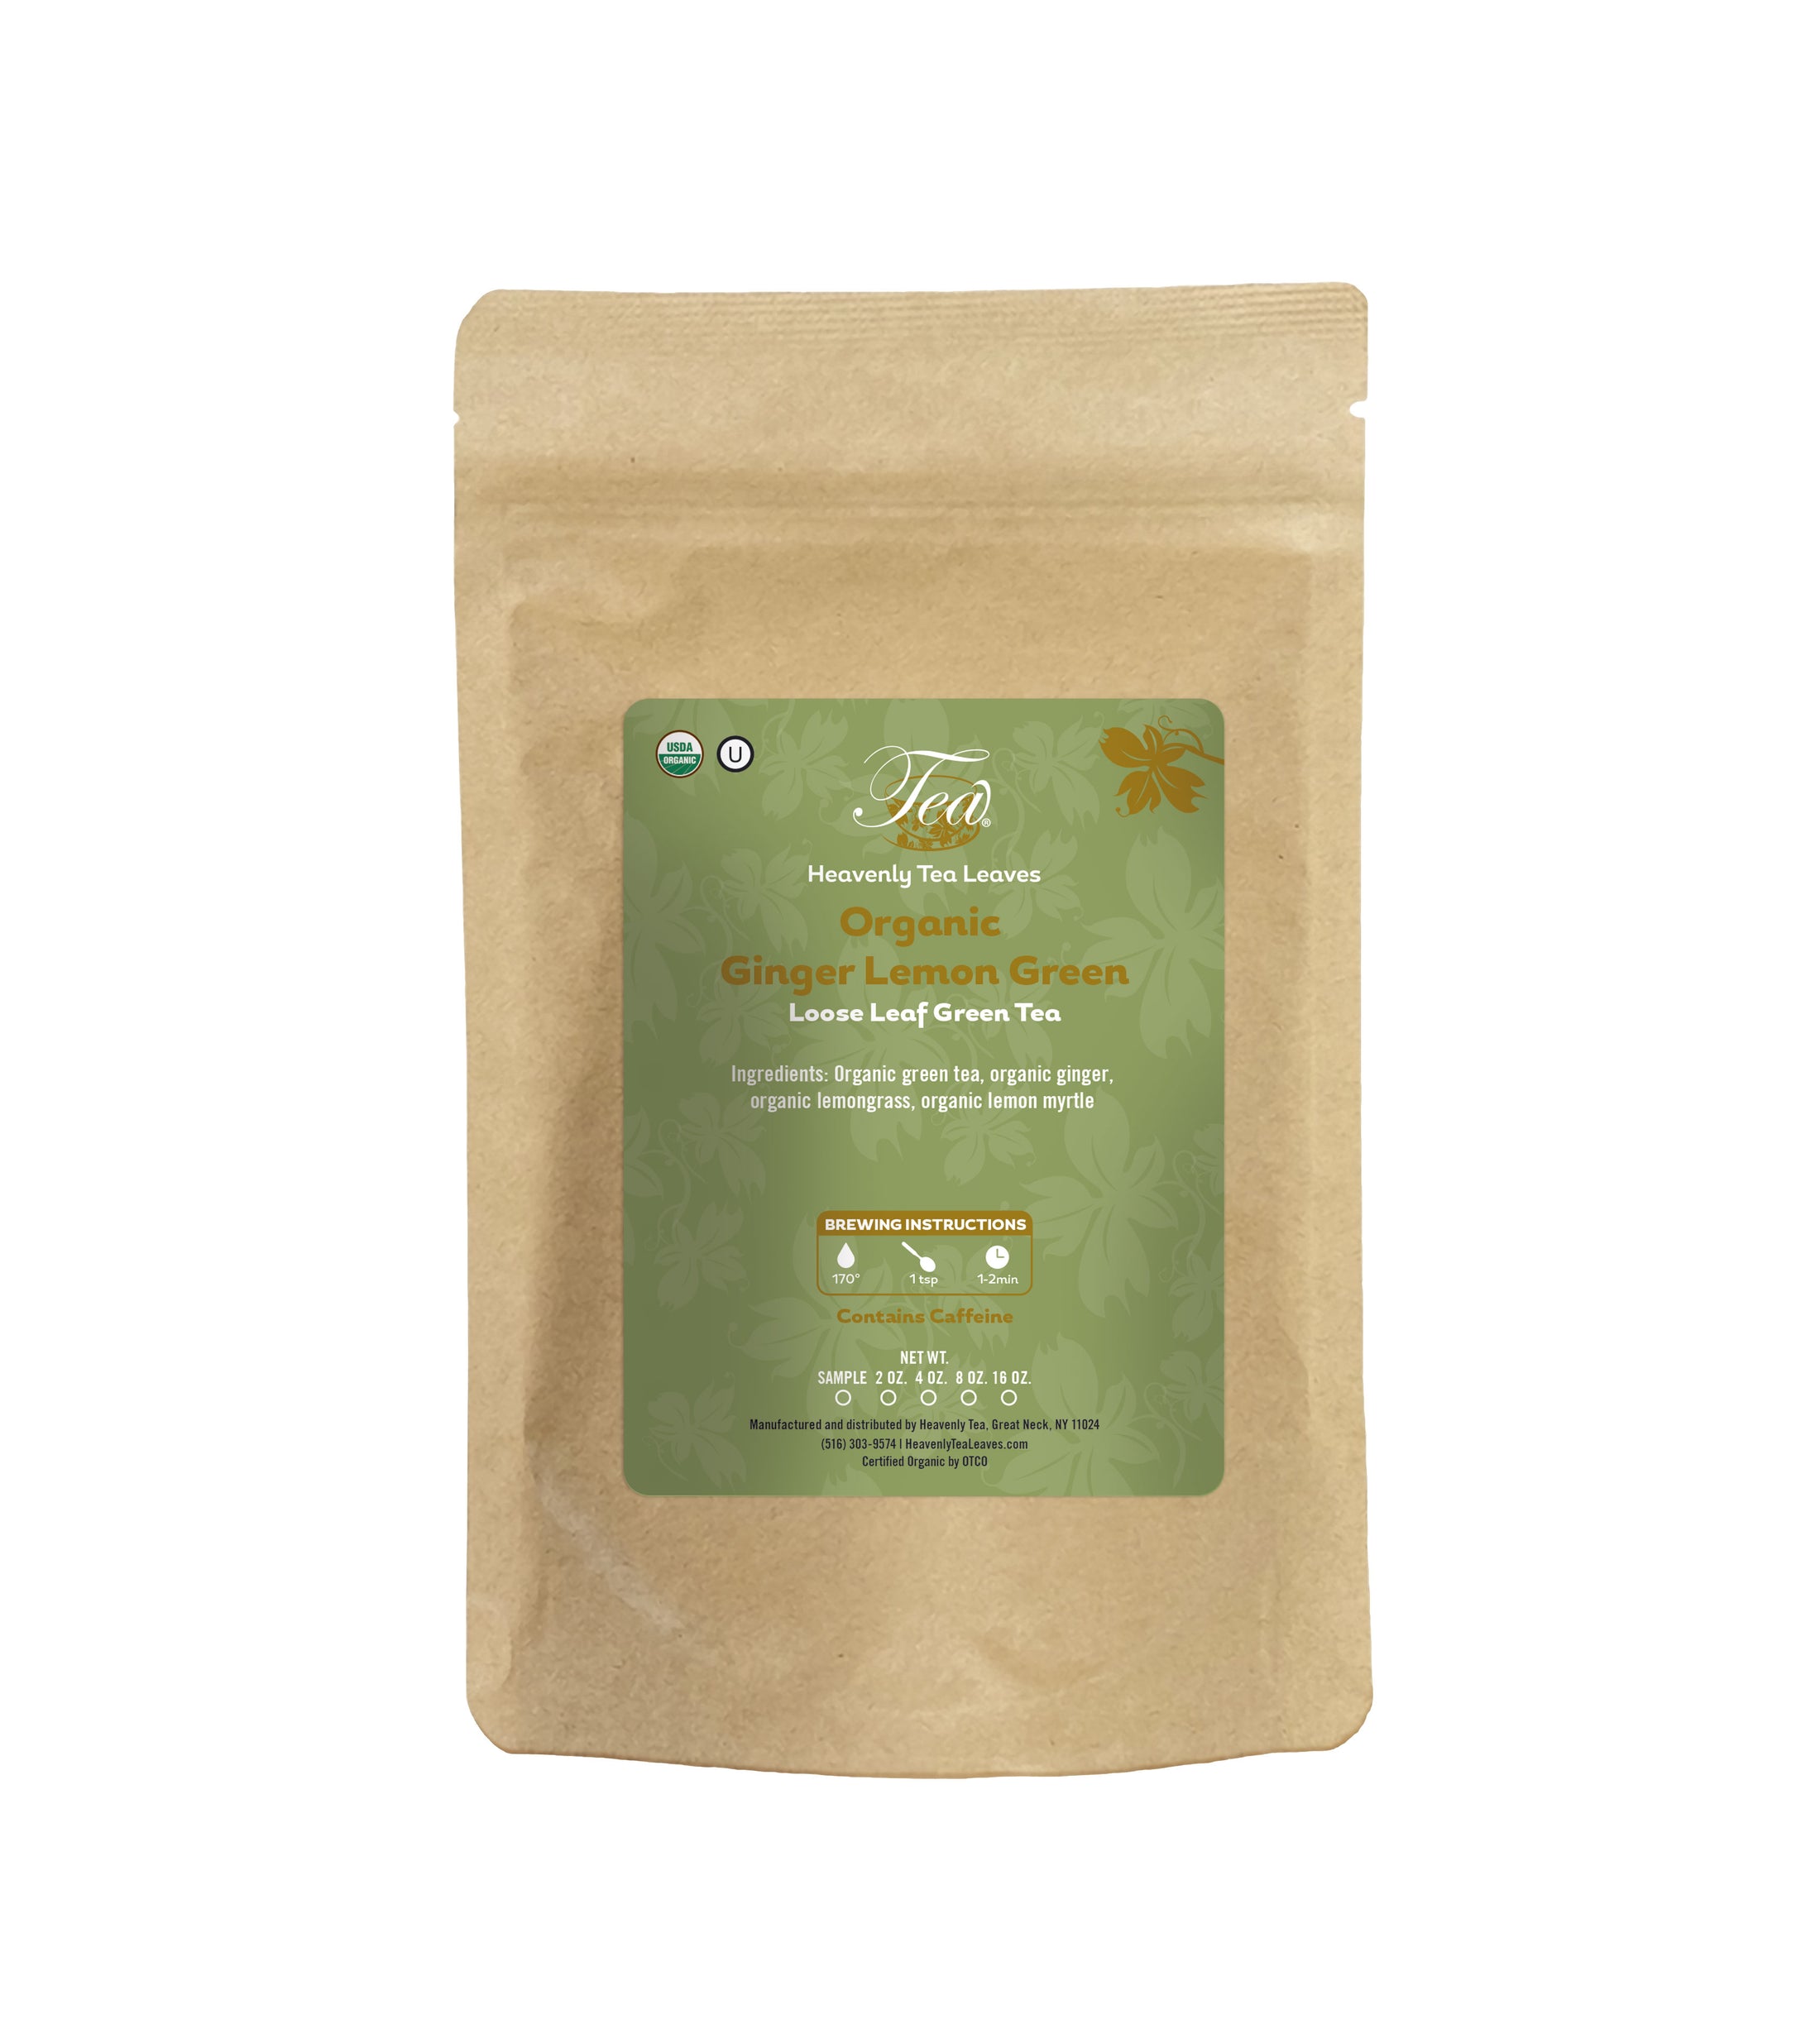 Organic Ginger Lemon Green - Premium Loose Leaf Green Tea | Heavenly Tea Leaves